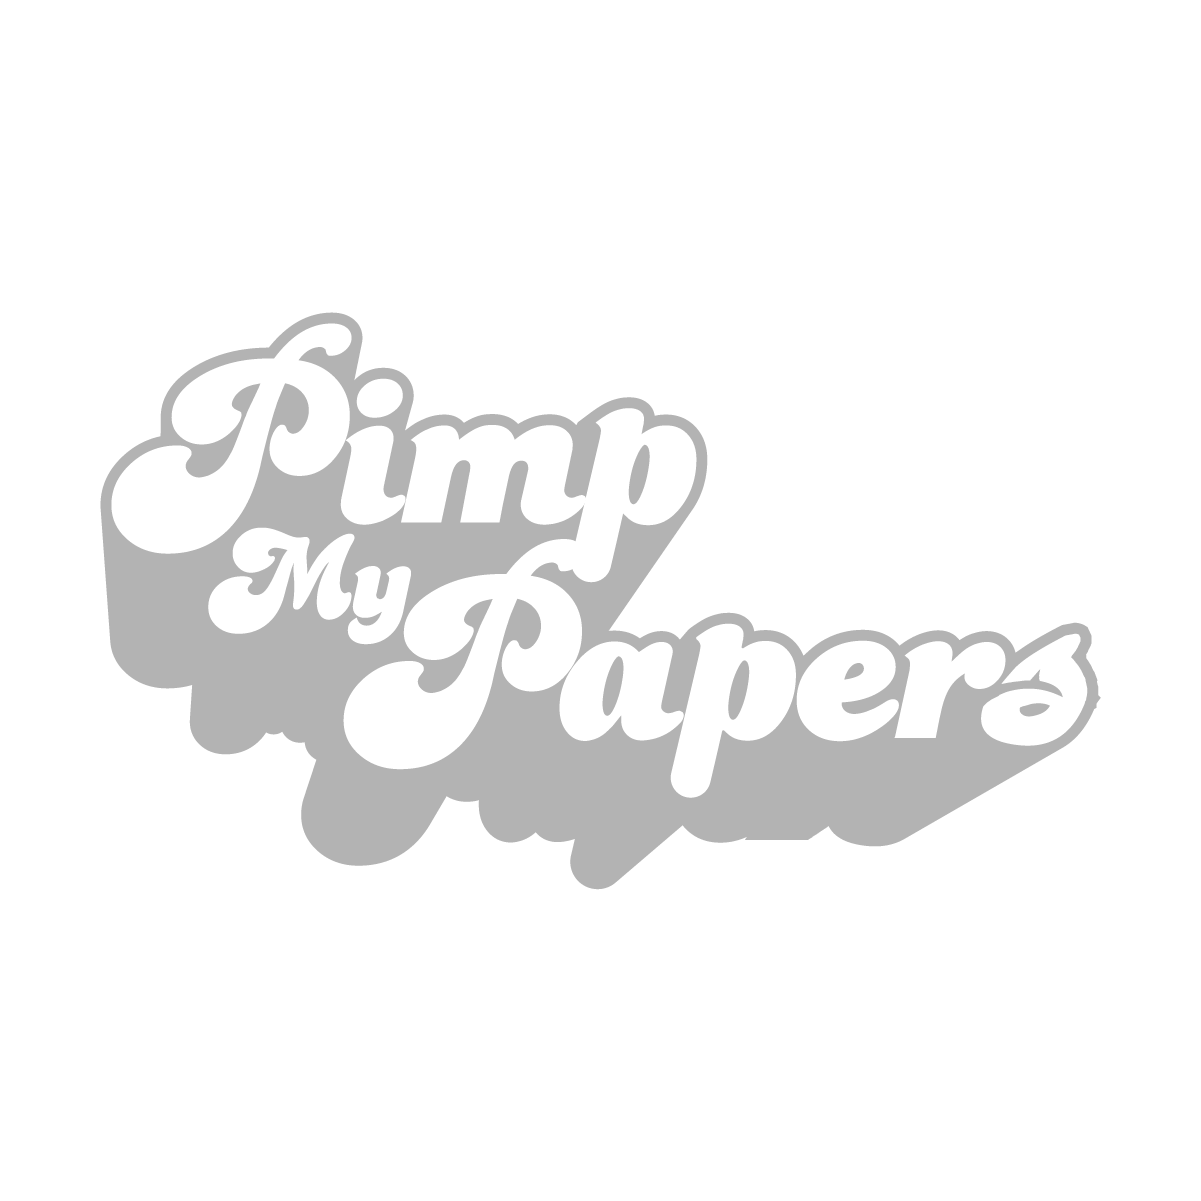 Pimp my papers